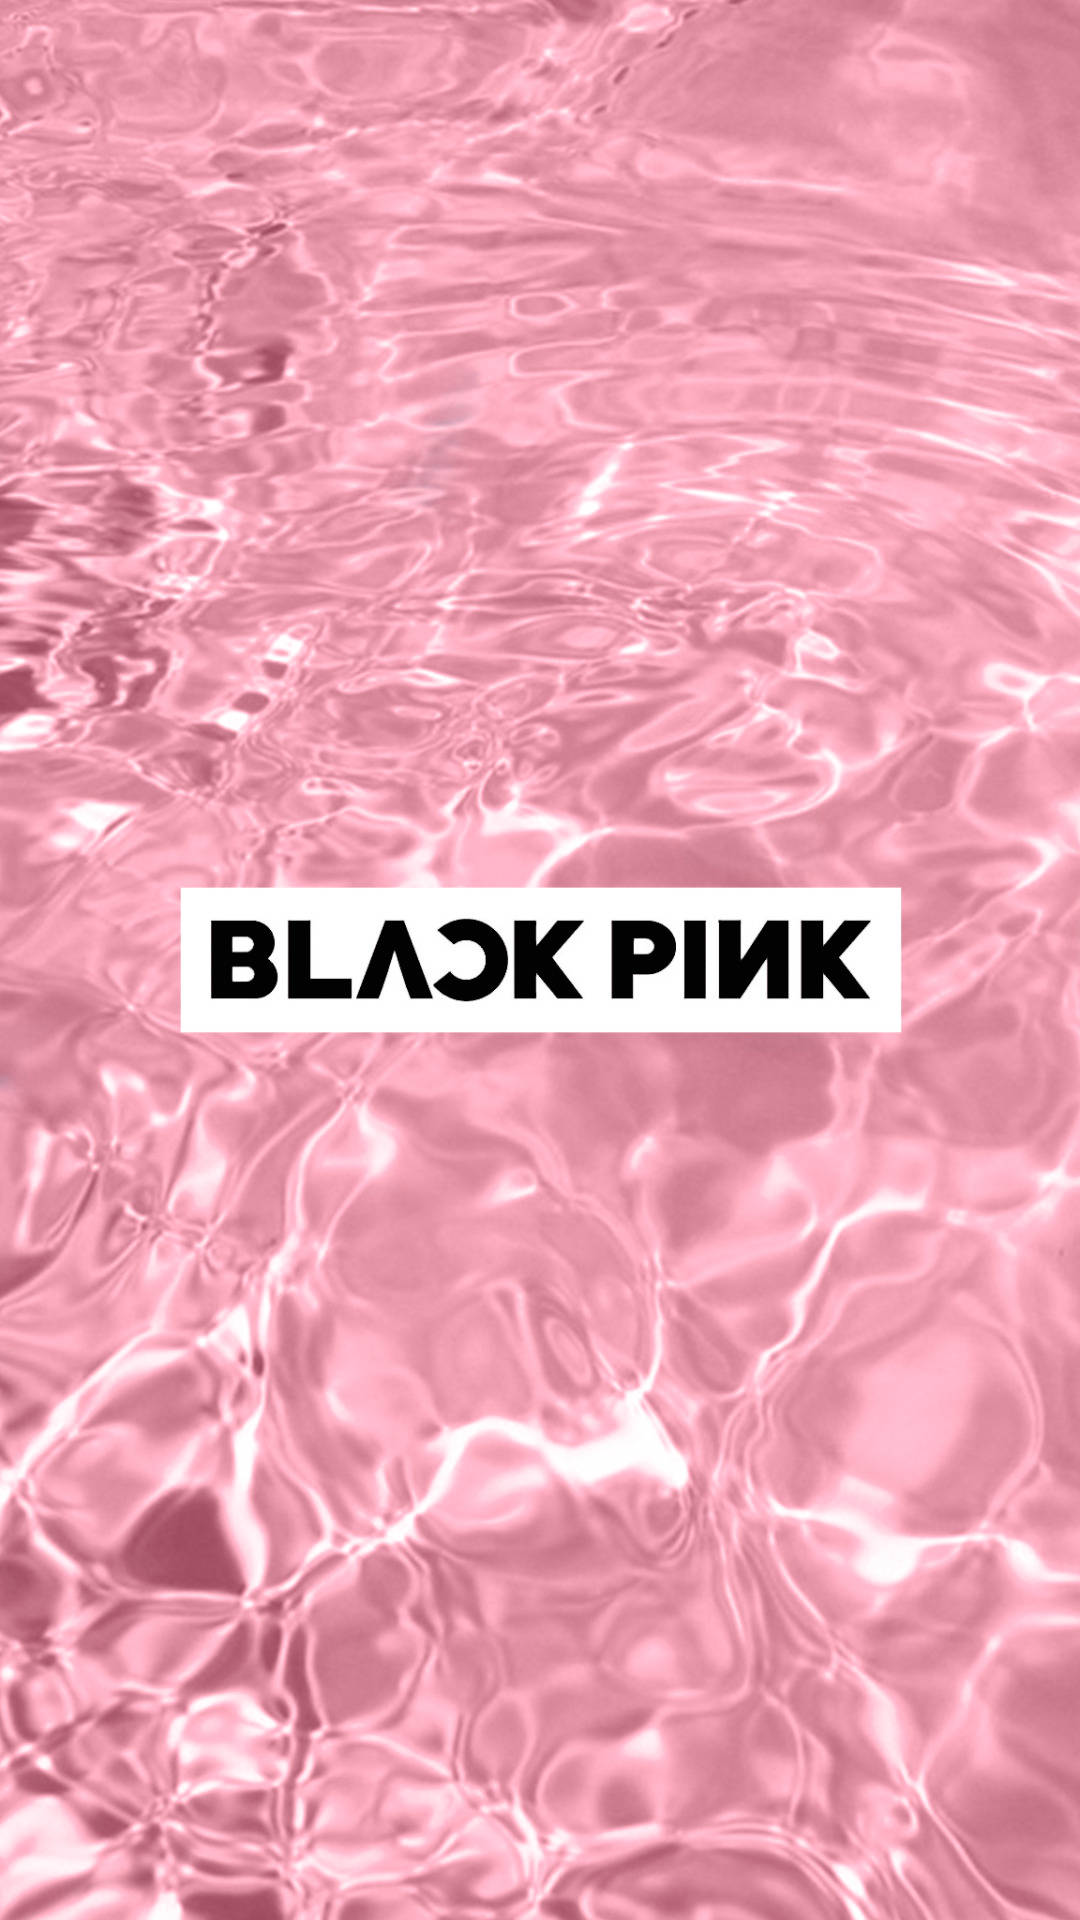 Blackpink Logo On Pink Water